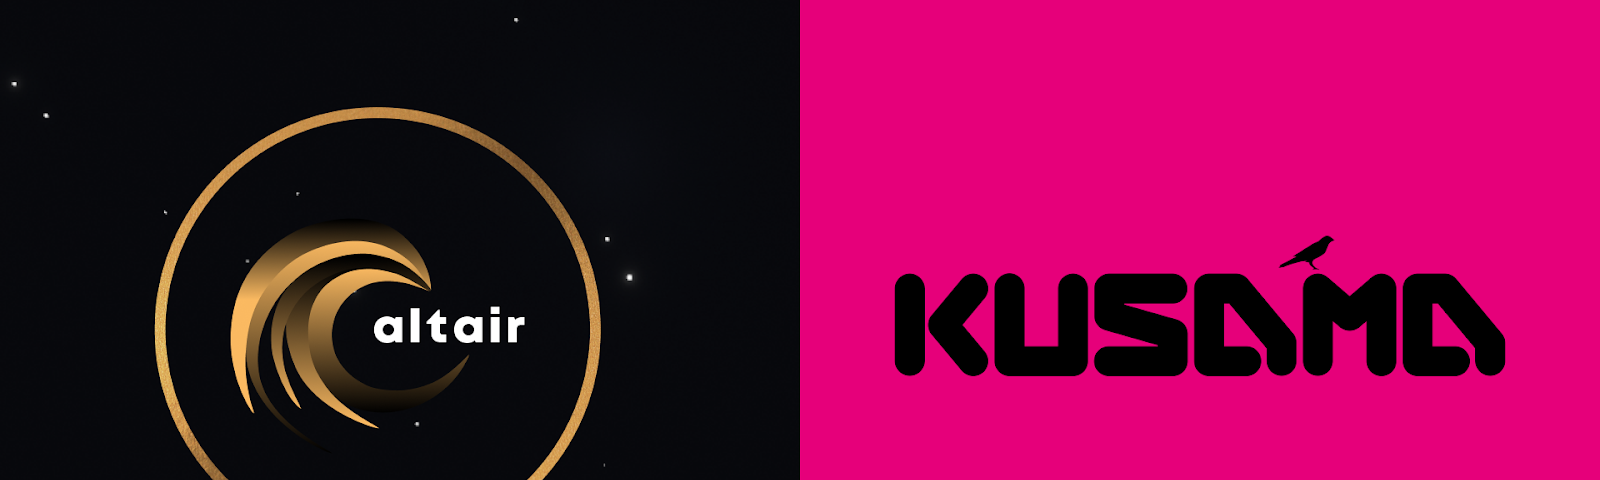 Altair and Kusama network logos